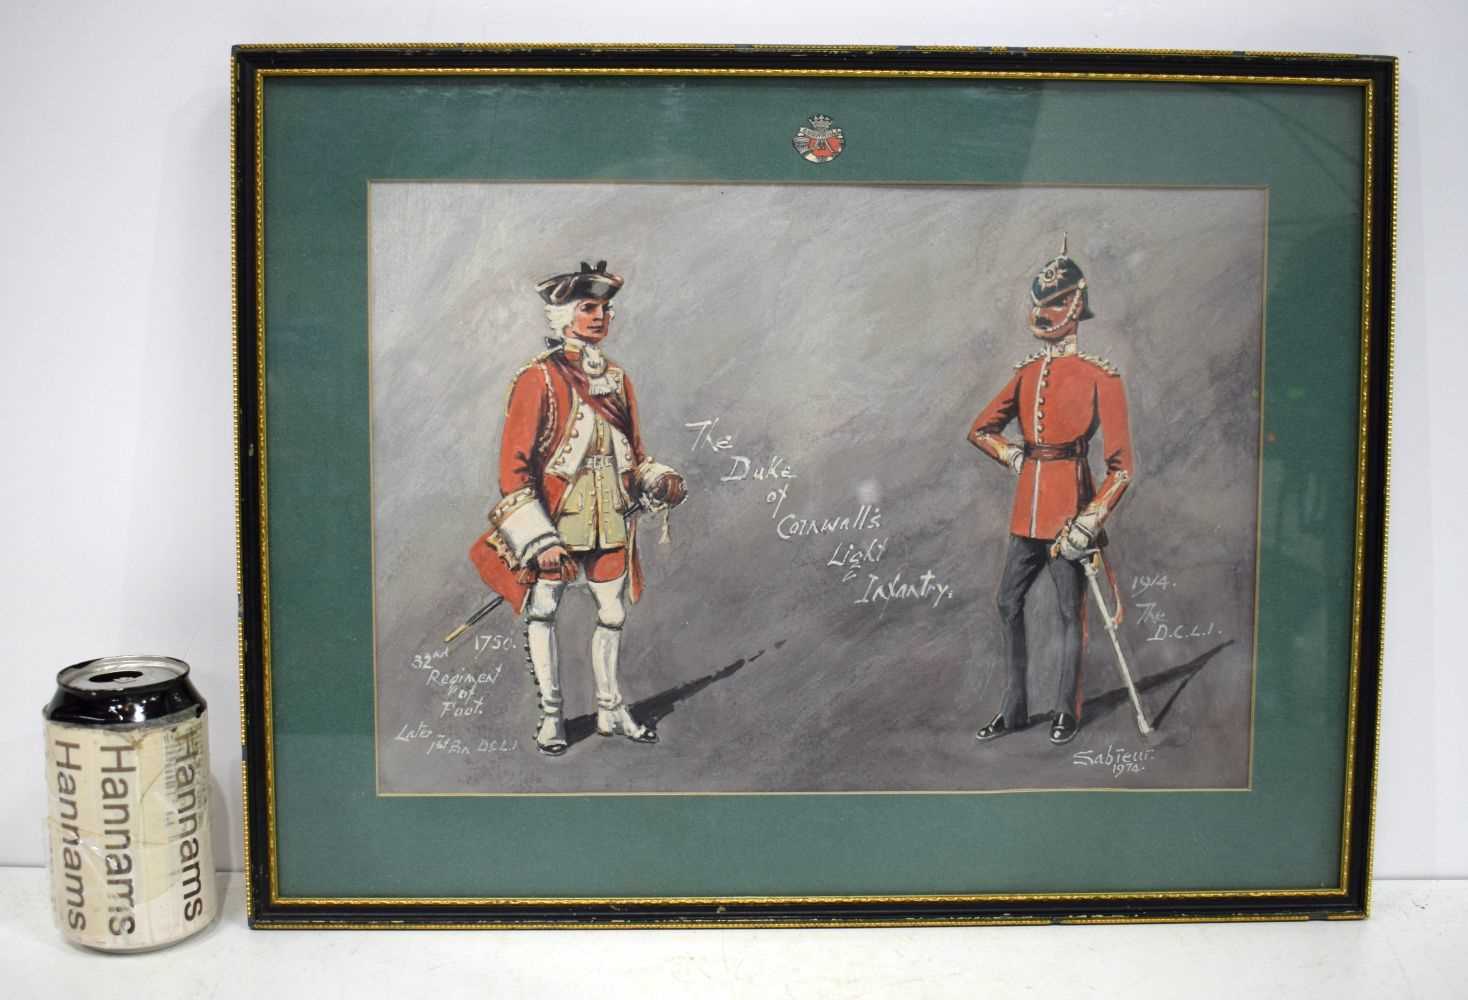 A framed Gouache study of The Duke of Cornwall light Infantry signed Sabreur 1974 26 x 37 cm. - Image 2 of 8